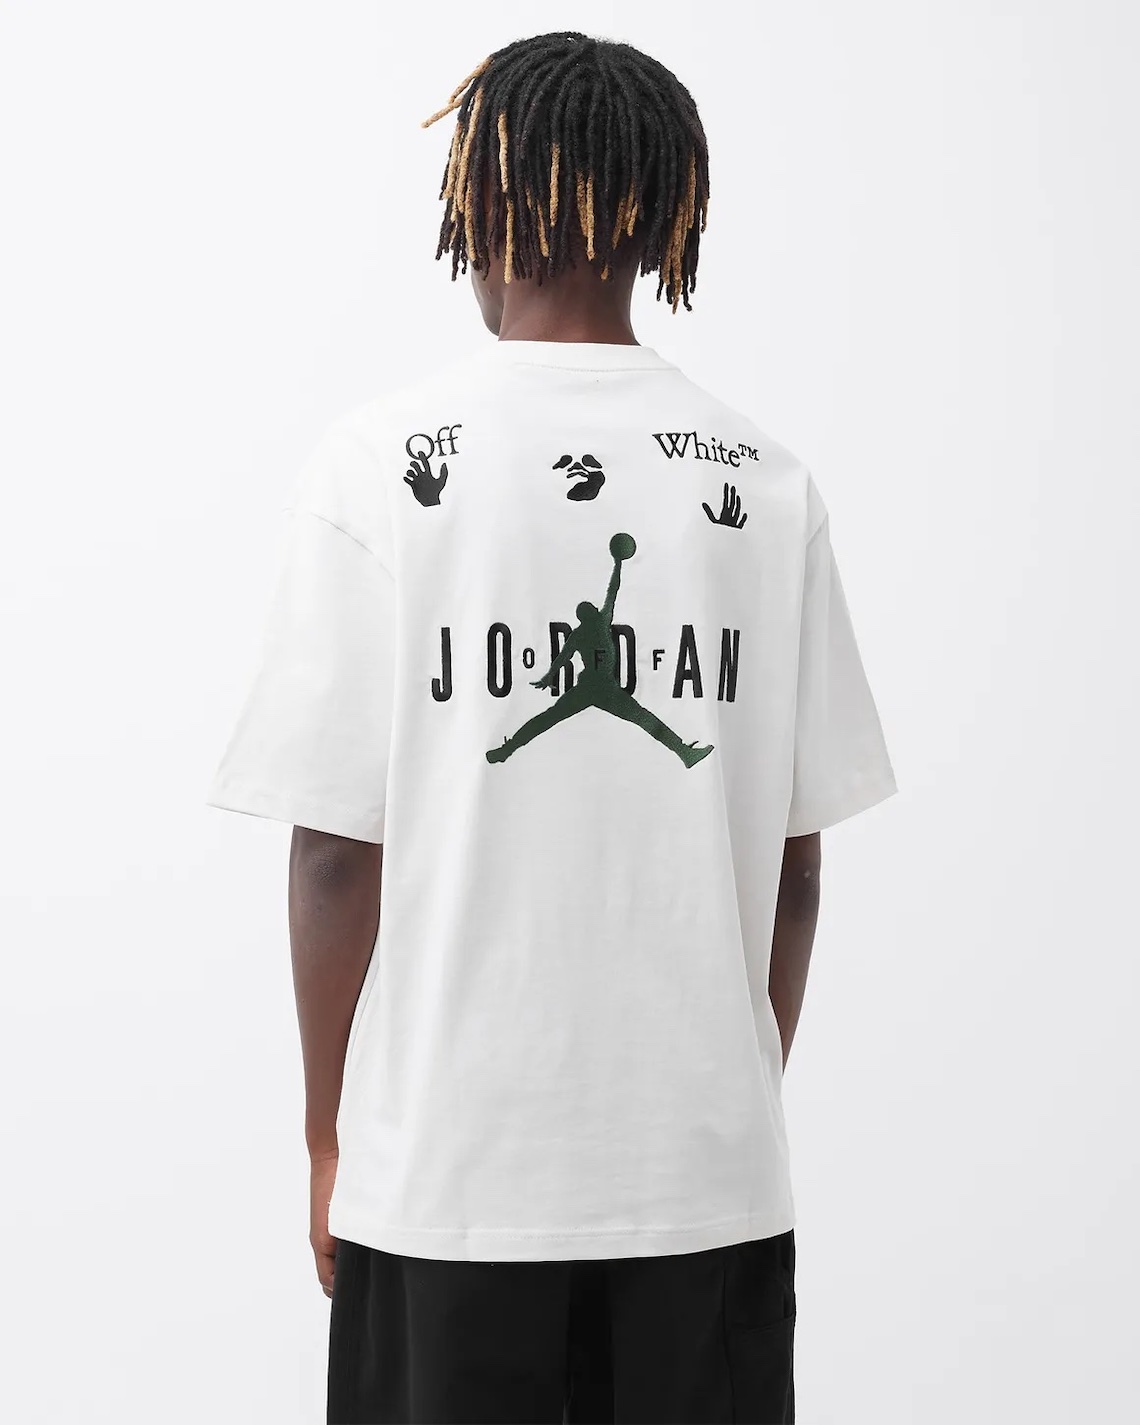 Jordan x Off-White Apparel Collection